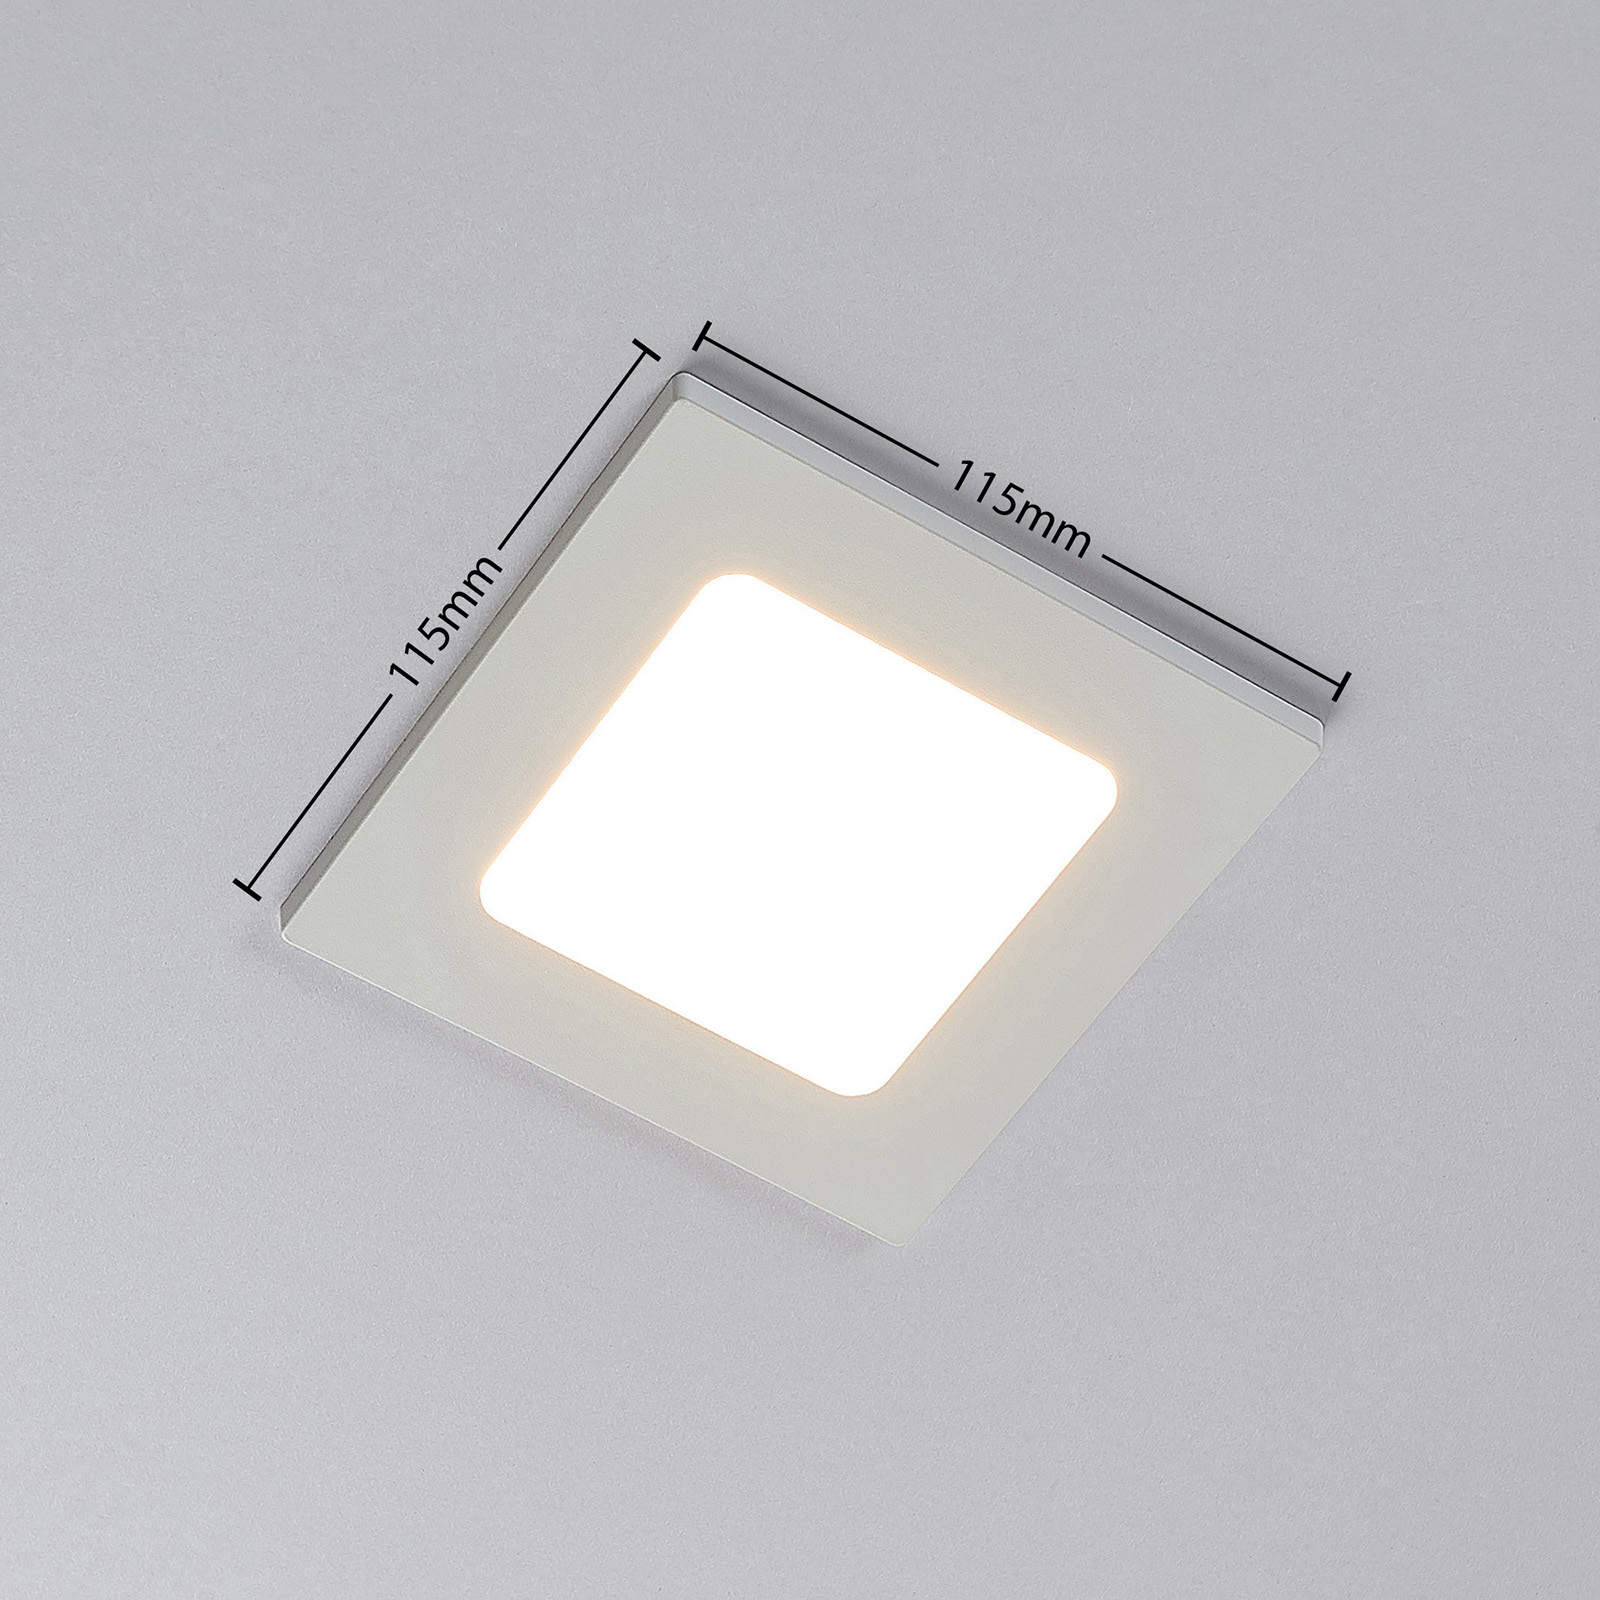 LED-Einbaustrahler Joki weiß 3000K eckig 11,5cm